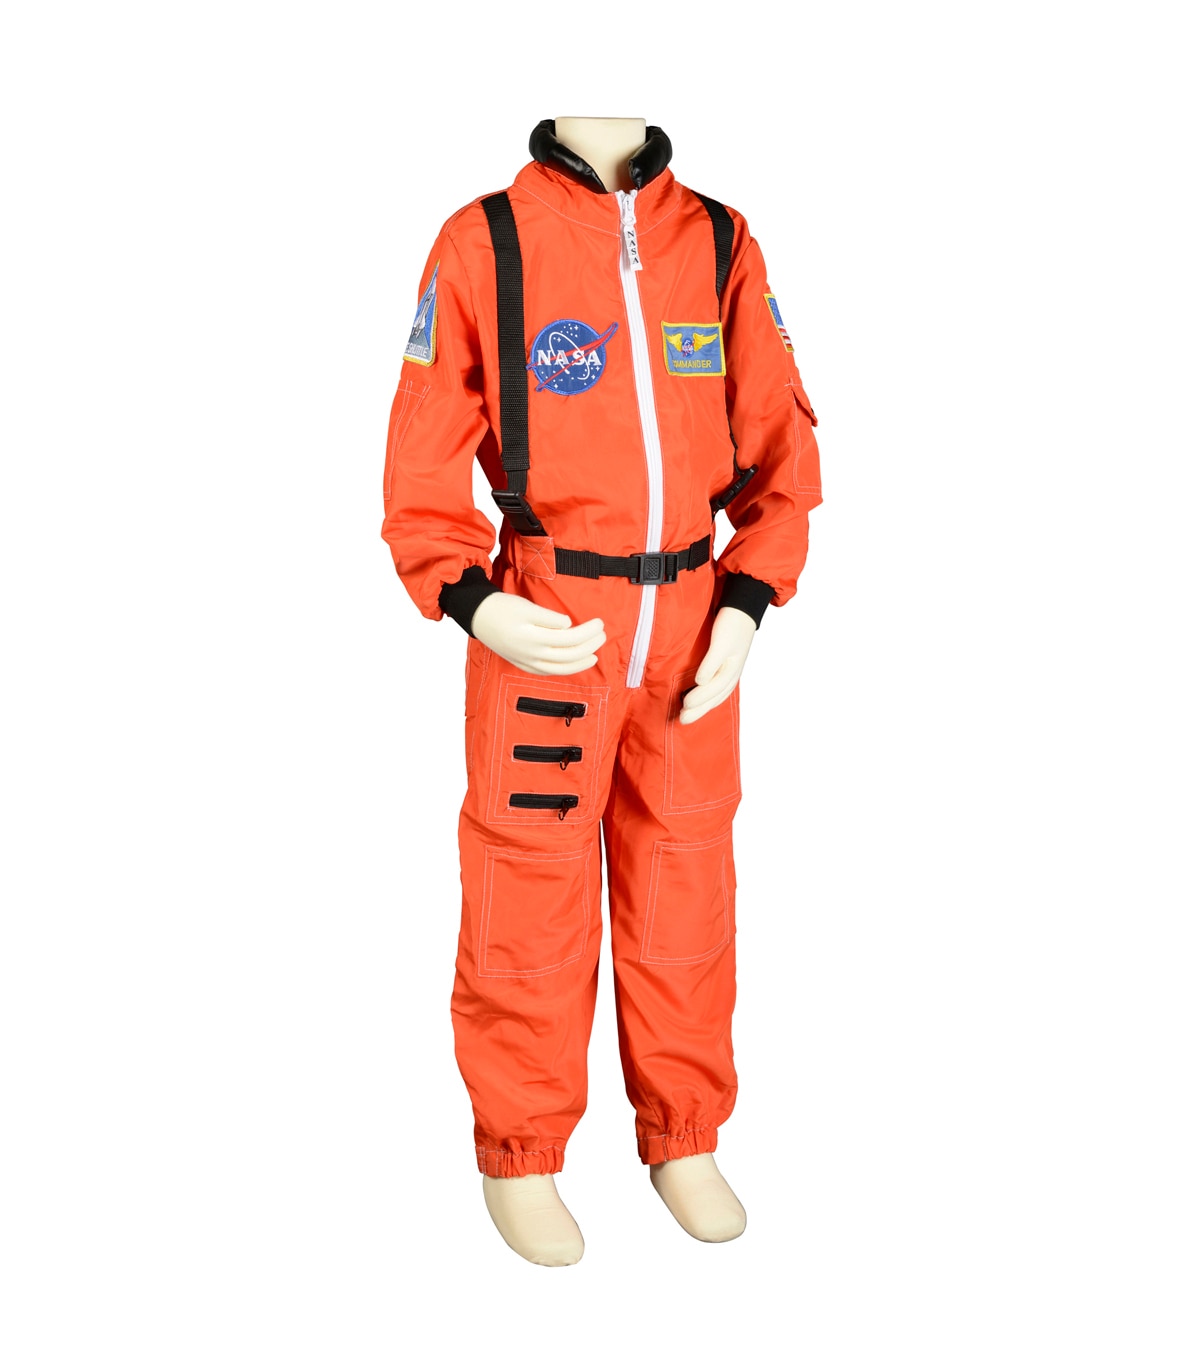 melissa and doug astronaut suit